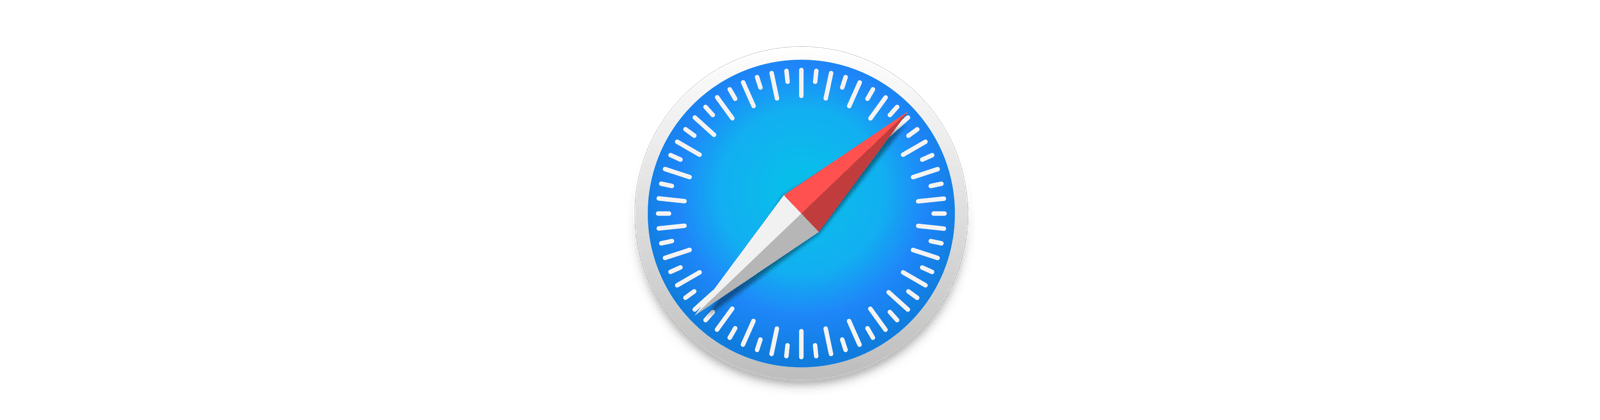 Safari Macbook Apple Web Brow